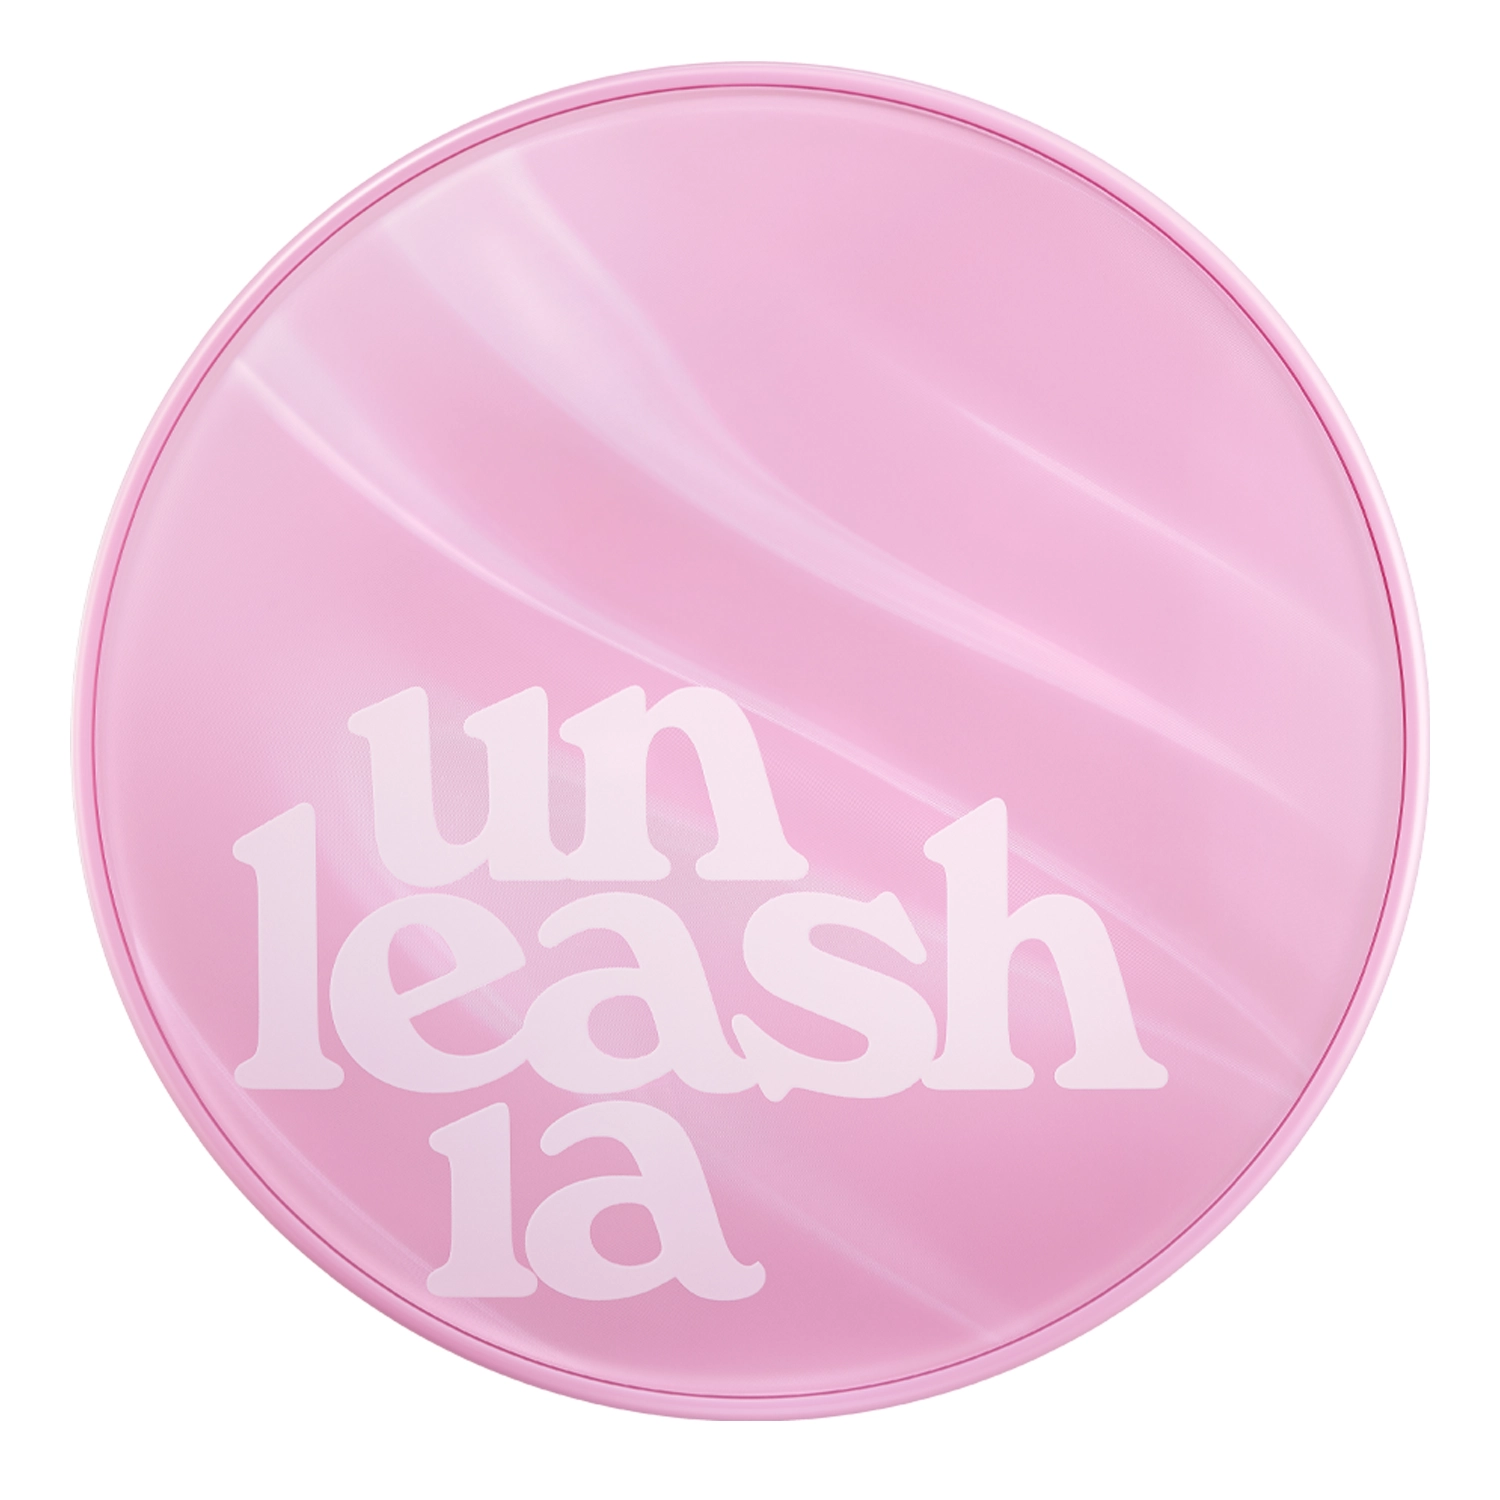 Unleashia - Don't Touch Glass Pink Cushion SPF50+ PA++++ - Podkład w Poduszce - #21N Hyaline - 15g